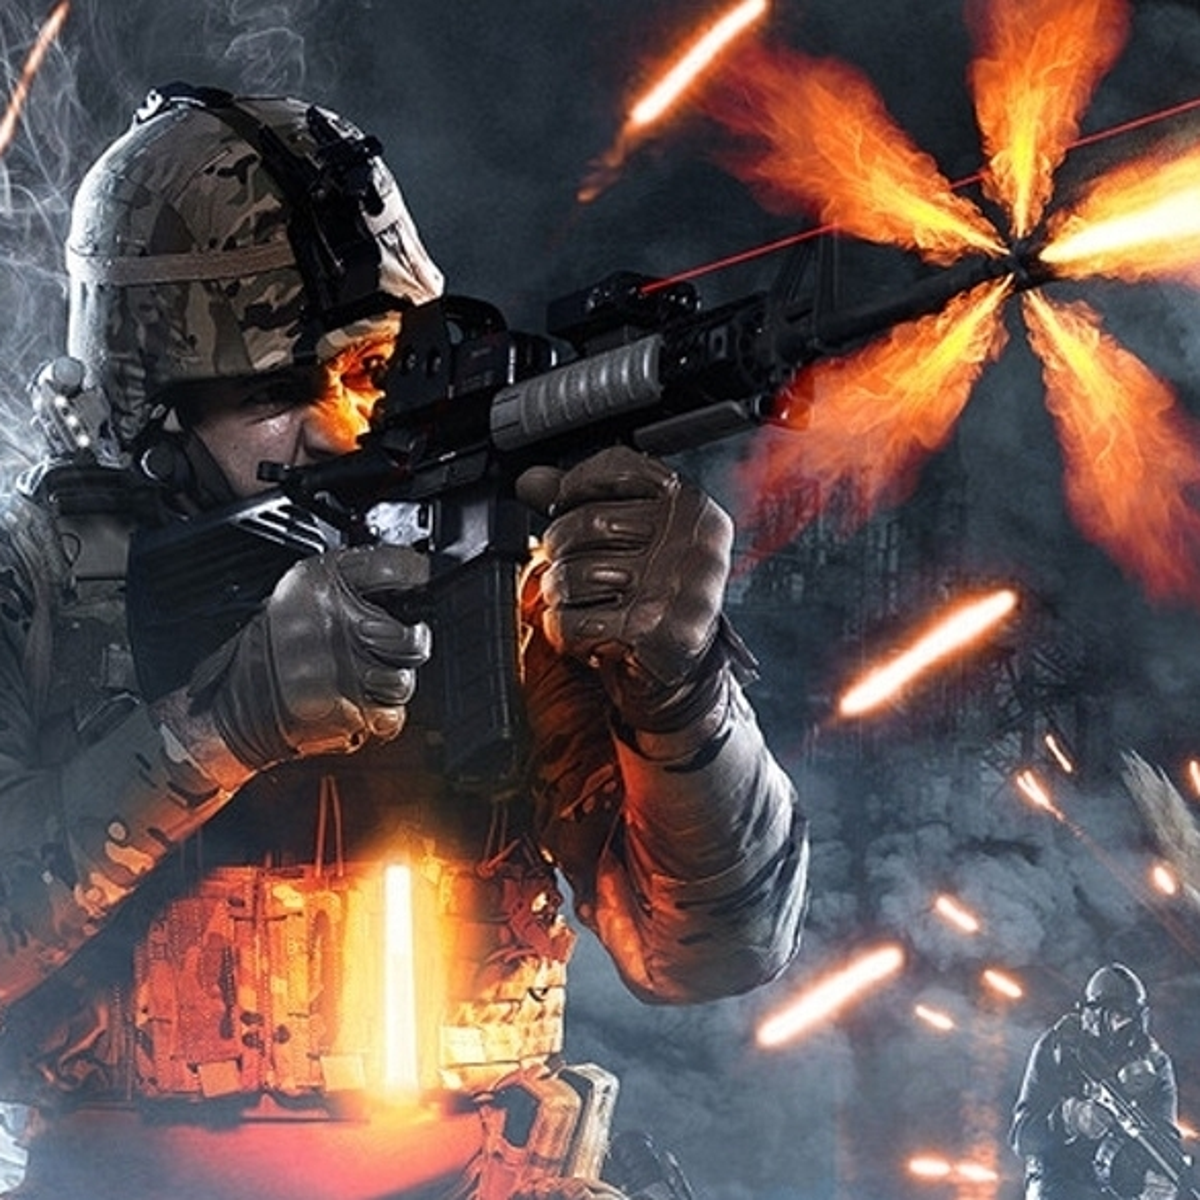 Battlefield 4 - PC Performance Analysis